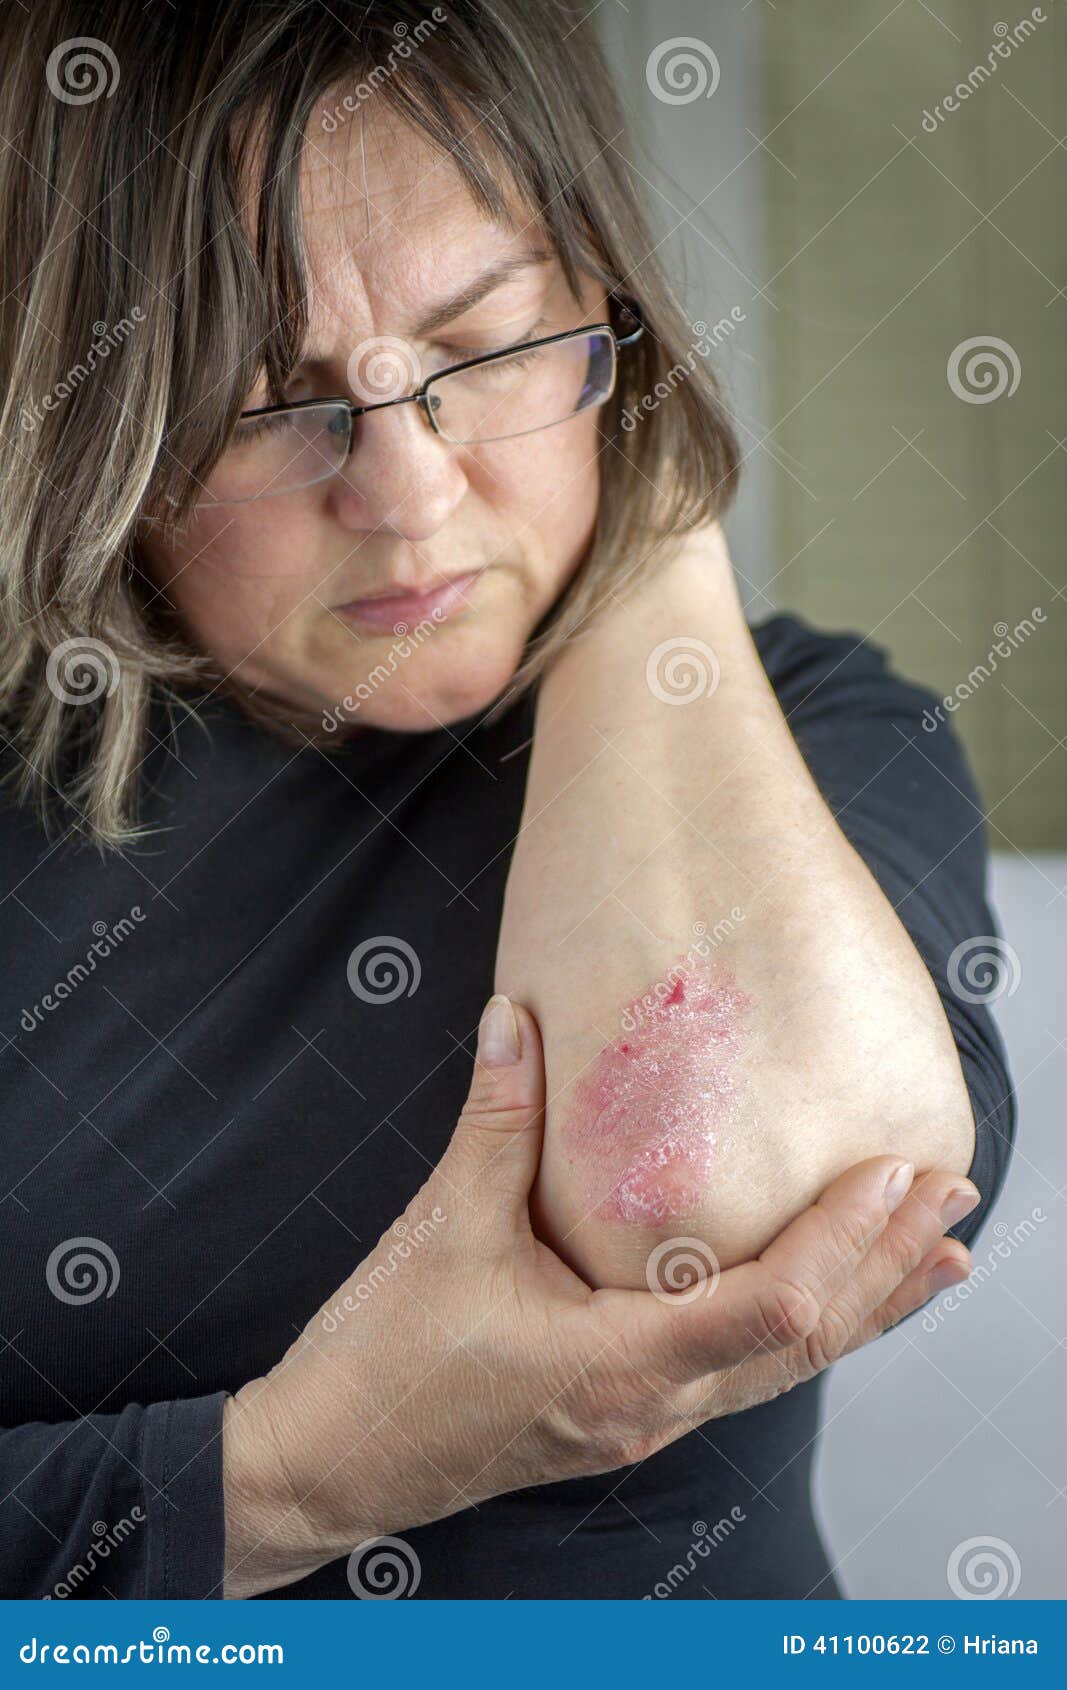 psoriasis on elbow